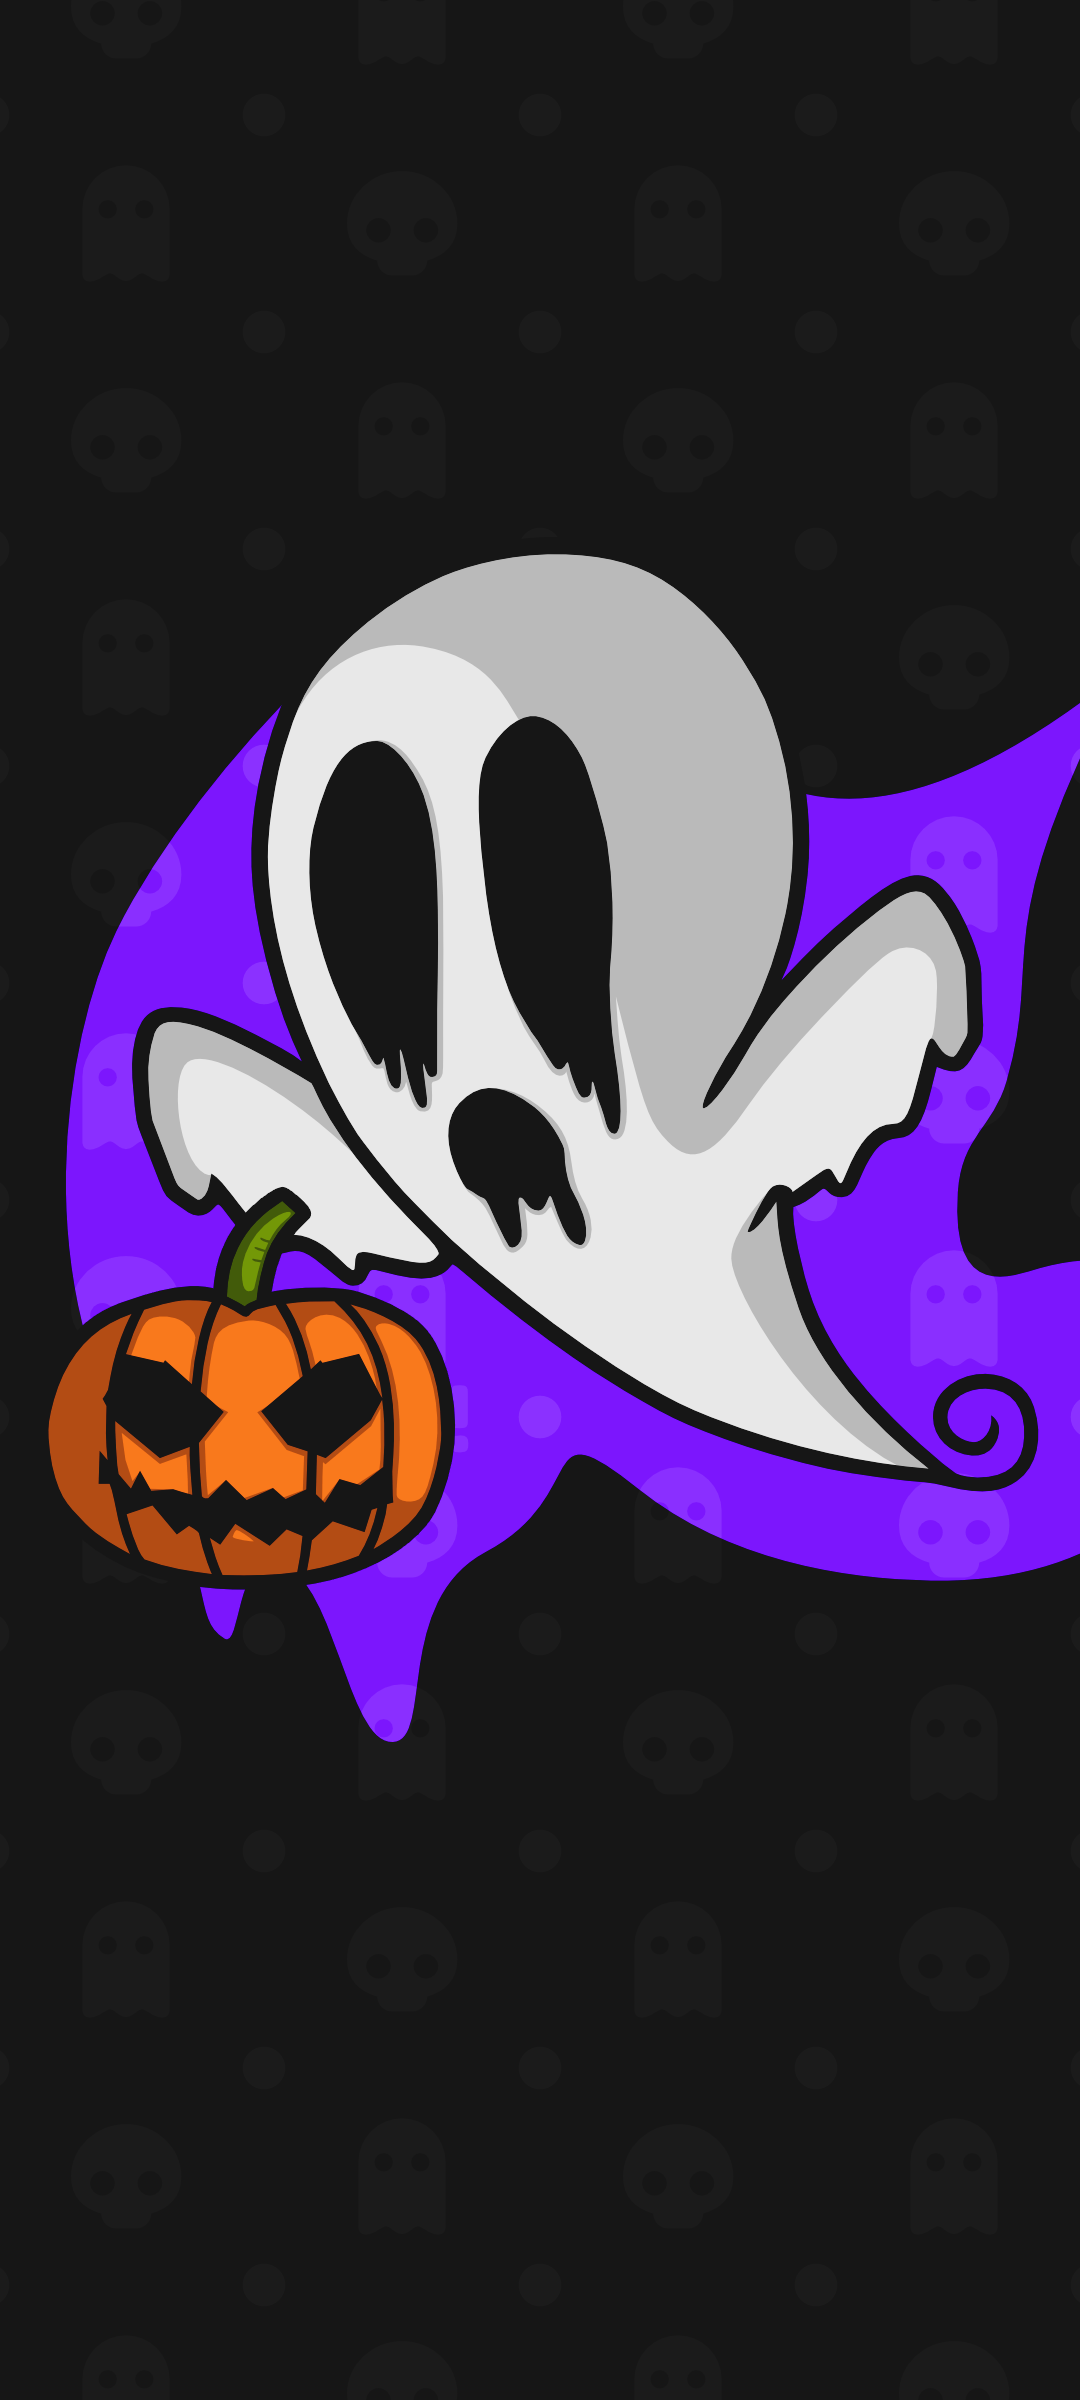 En este momento estás viendo Halloween Ghost Wallpaper